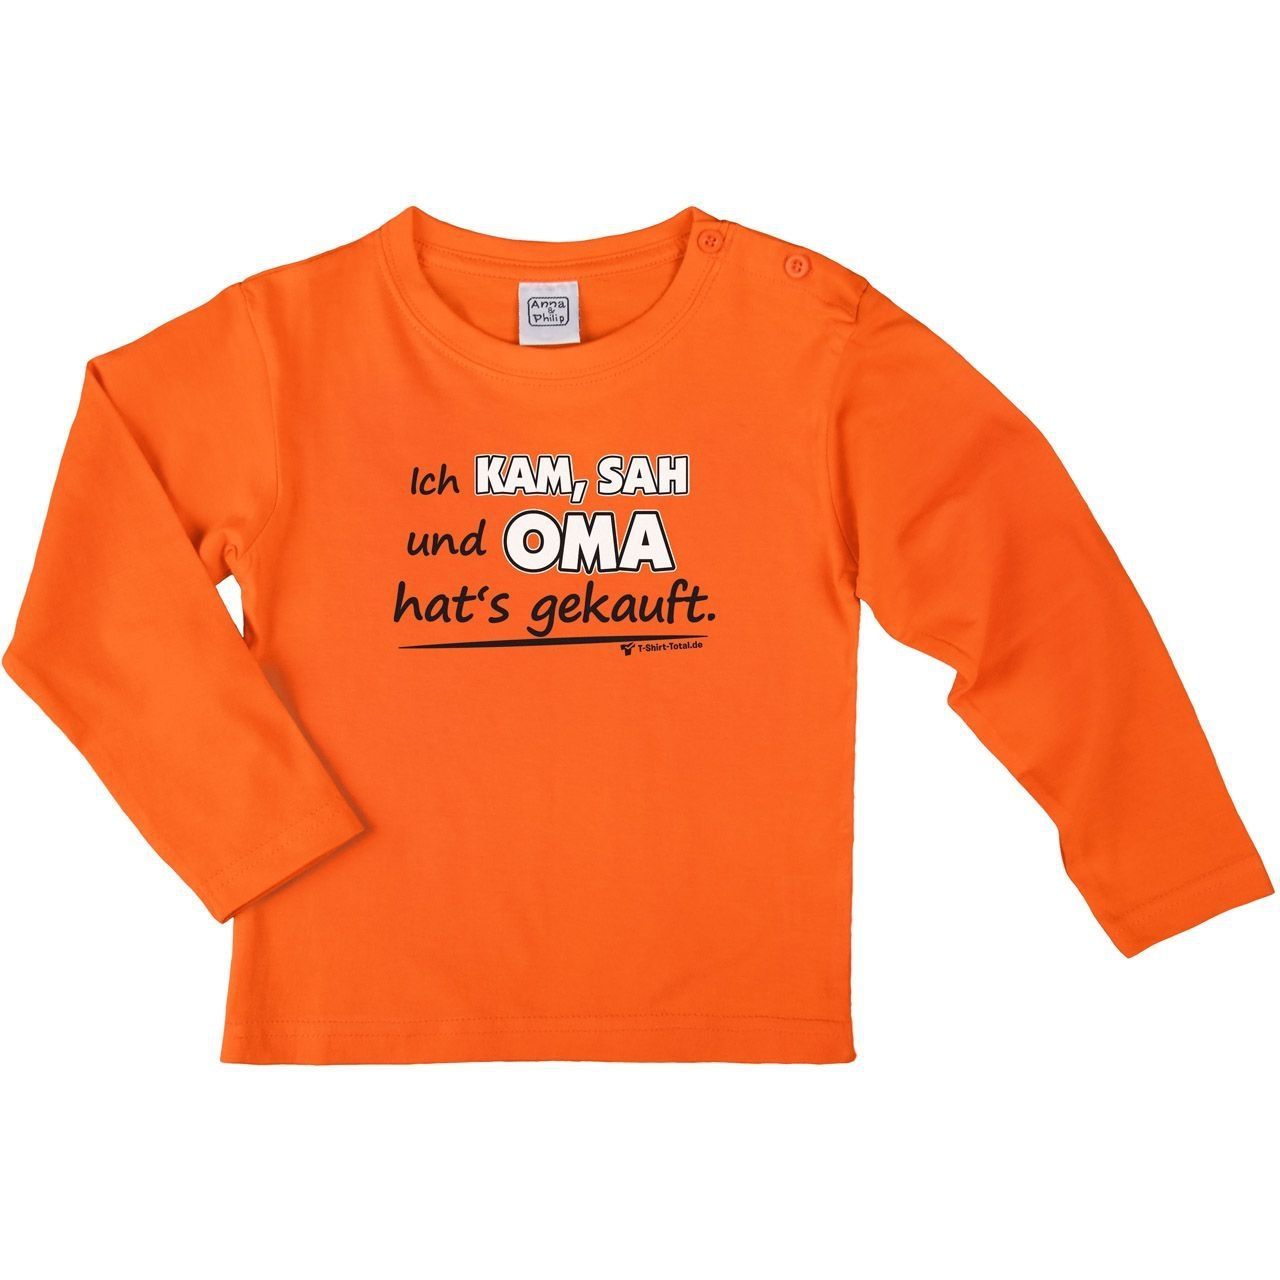 Oma hats gekauft Kinder Langarm Shirt orange 92